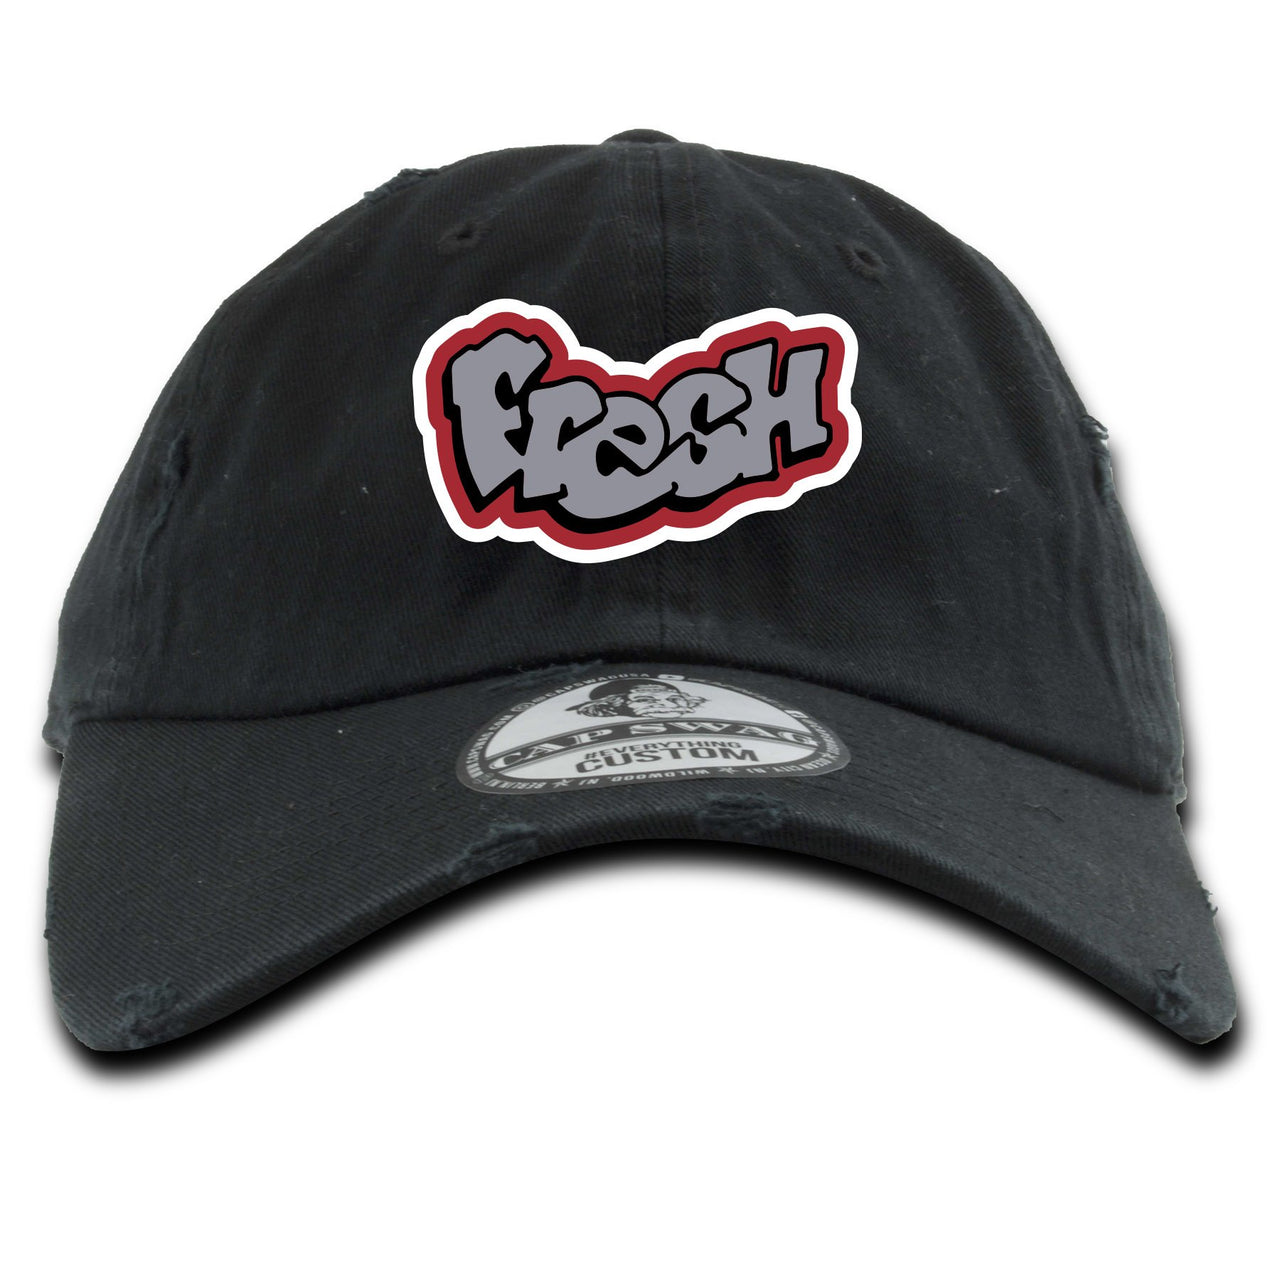 Bred 2019 4s Distressed Dad Hat | Fresh Logo, Black